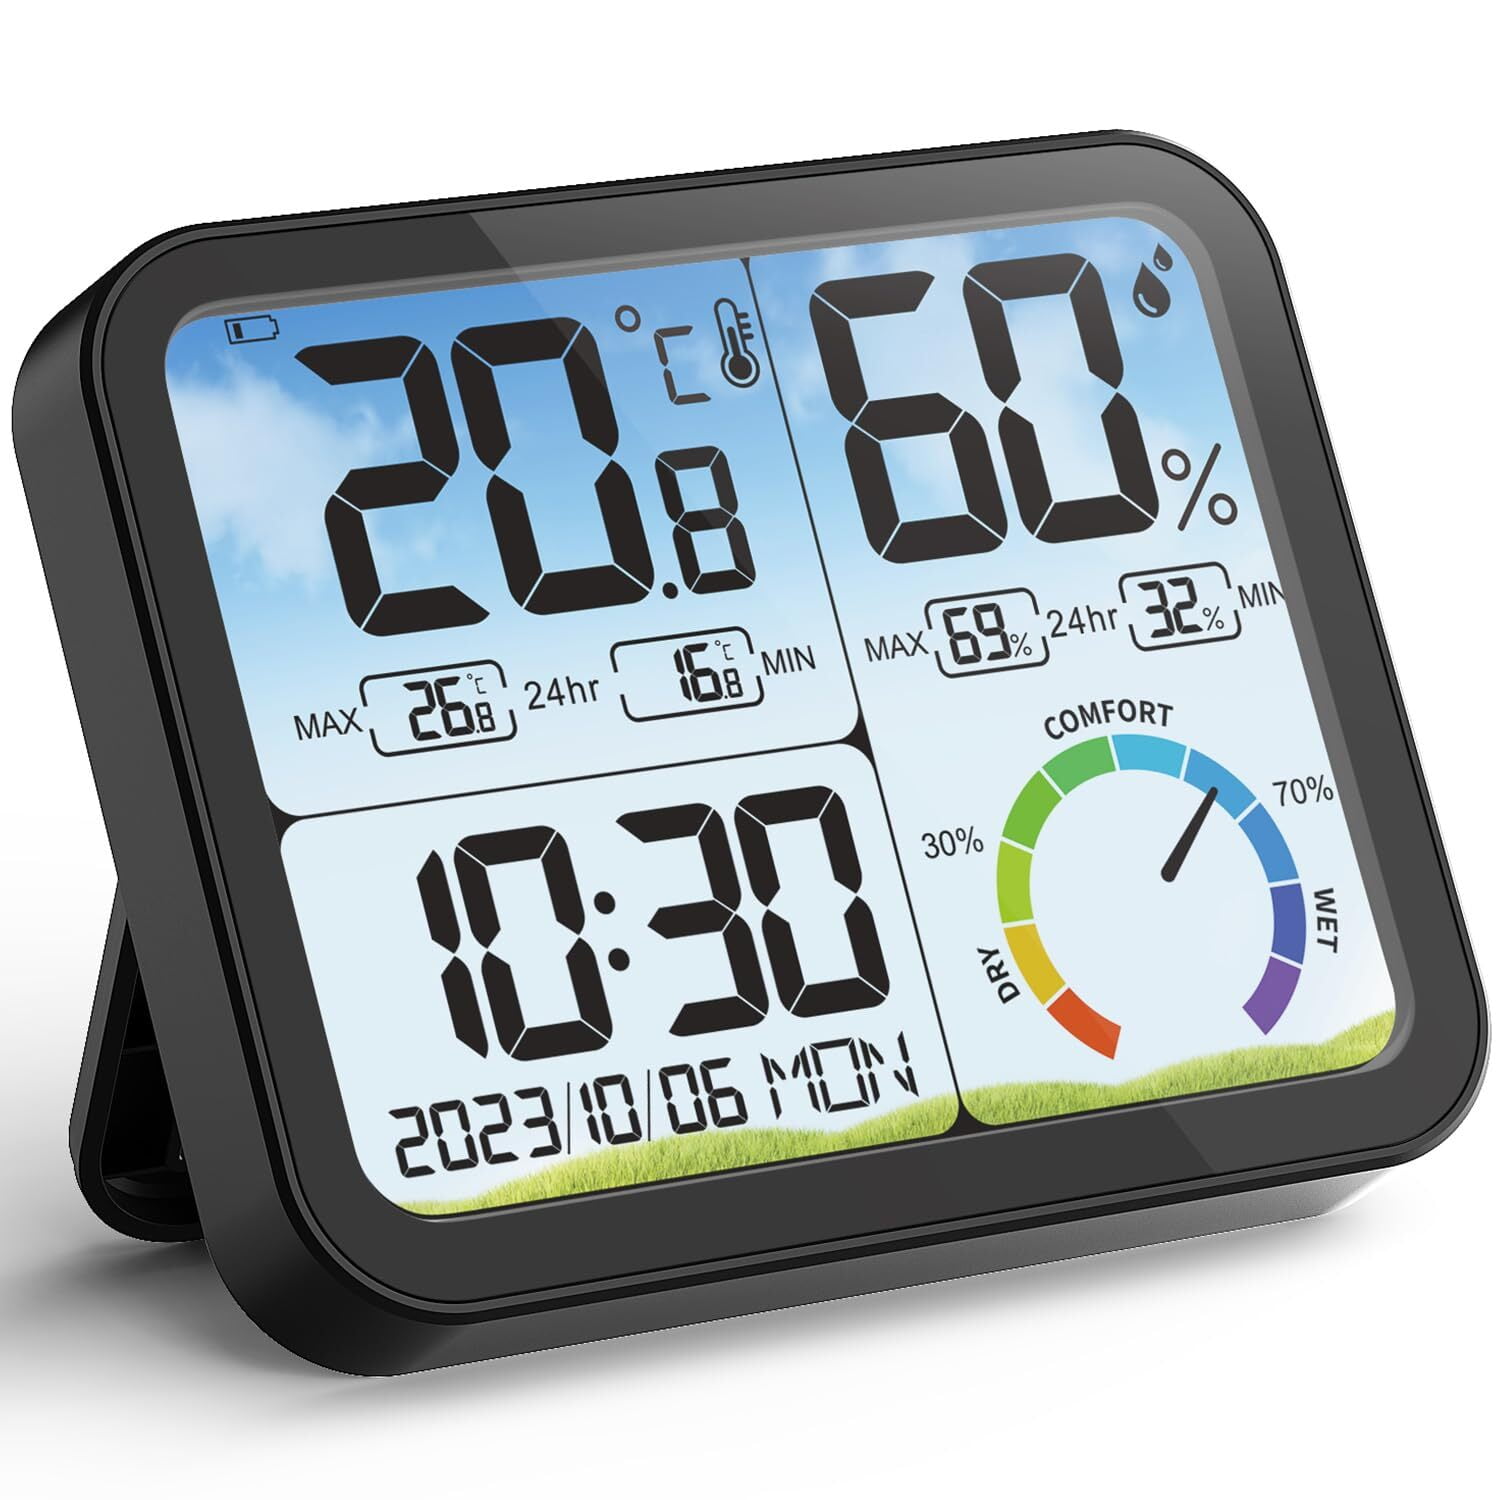 Humidity Gauge Indoor Thermometer Hygrometer Humidity Meter – Forensics  Detectors